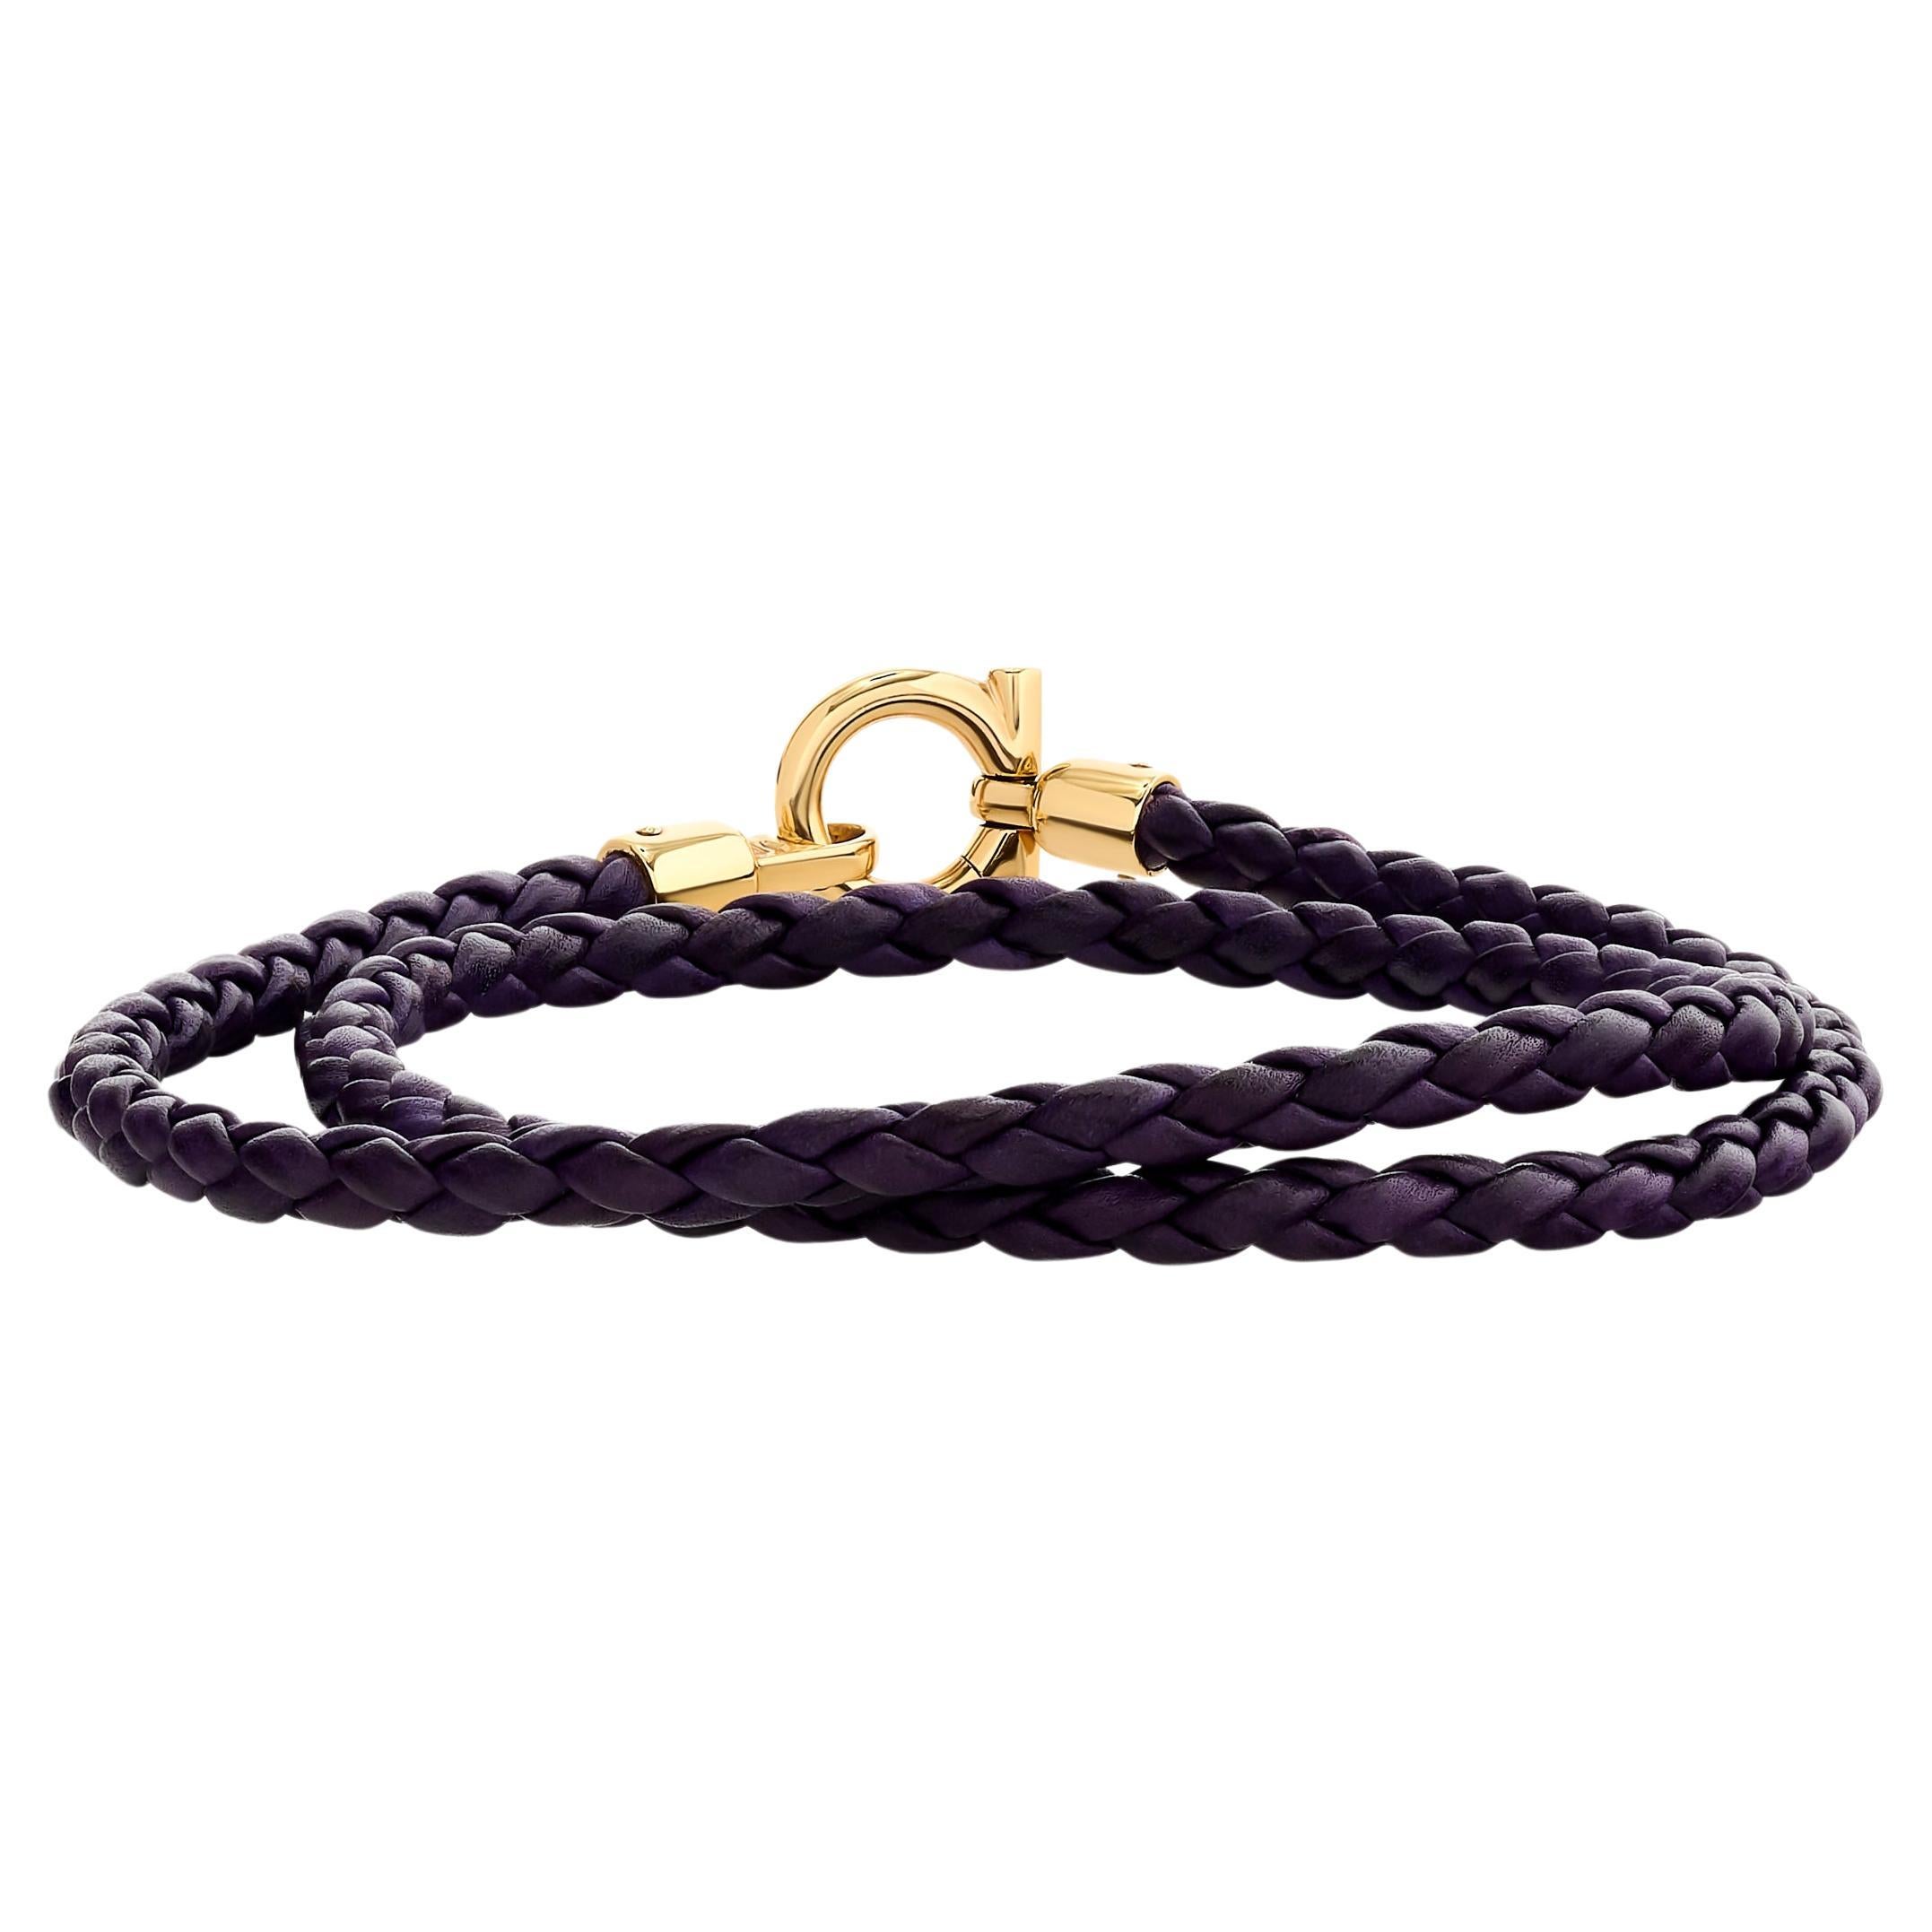 Ferragamo 18 Karat Purple Cord Double Bracelet/Necklace with Hook Closure